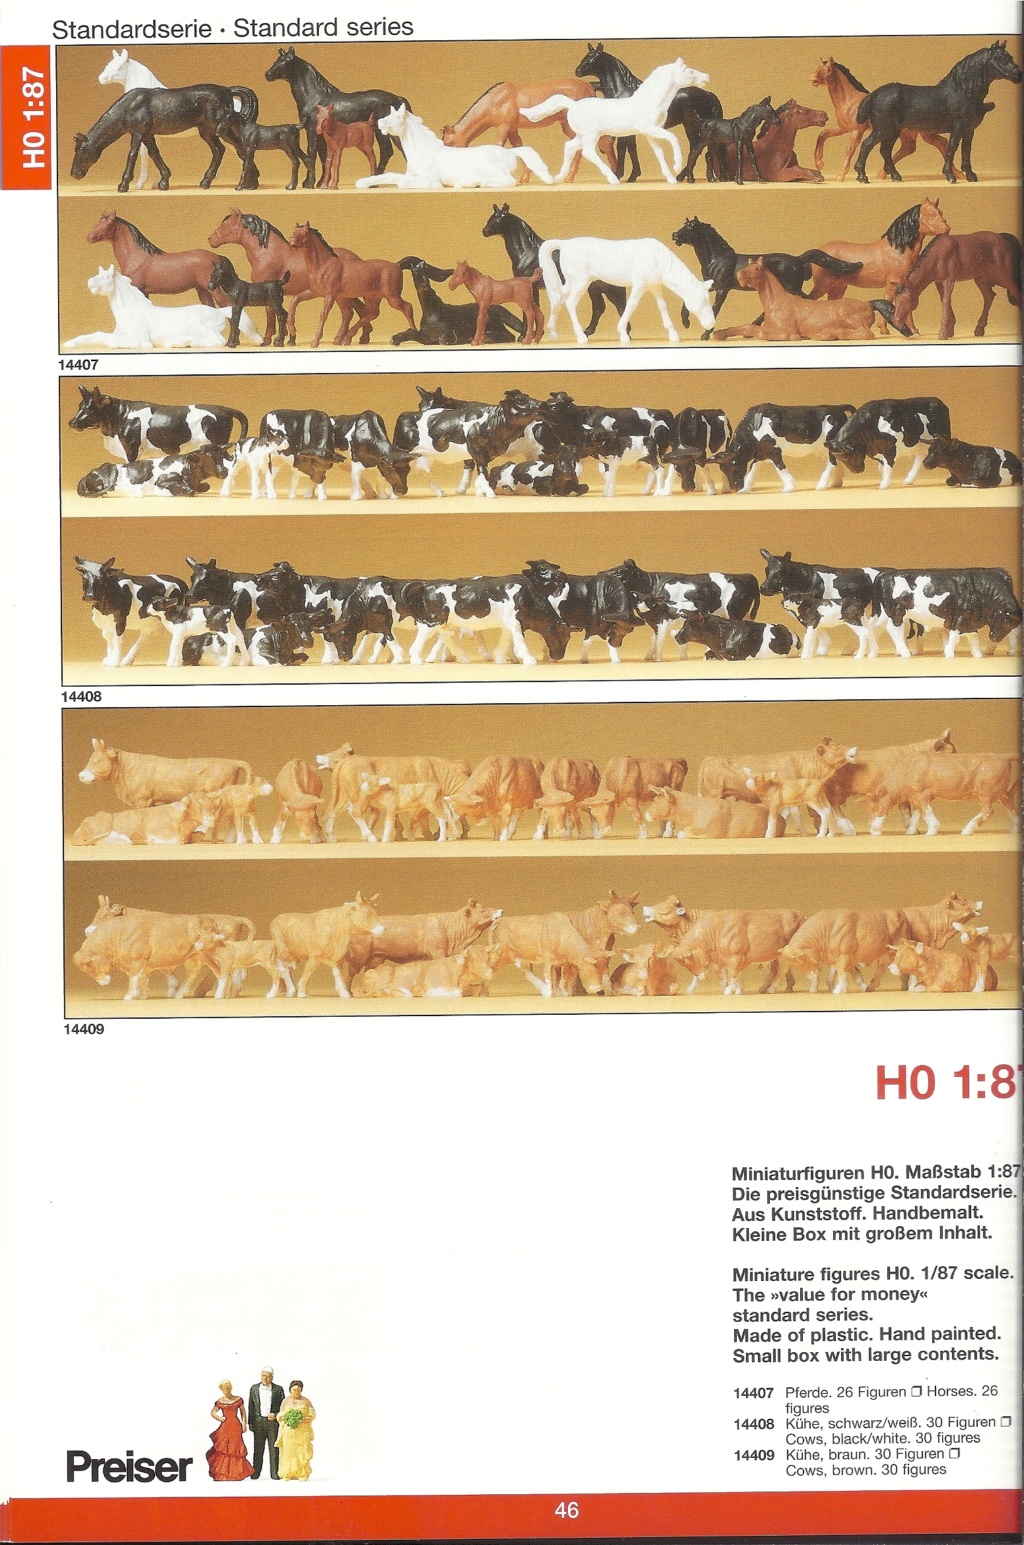 [PREISER 2007] Catalogue PK 24 2007 Preis684